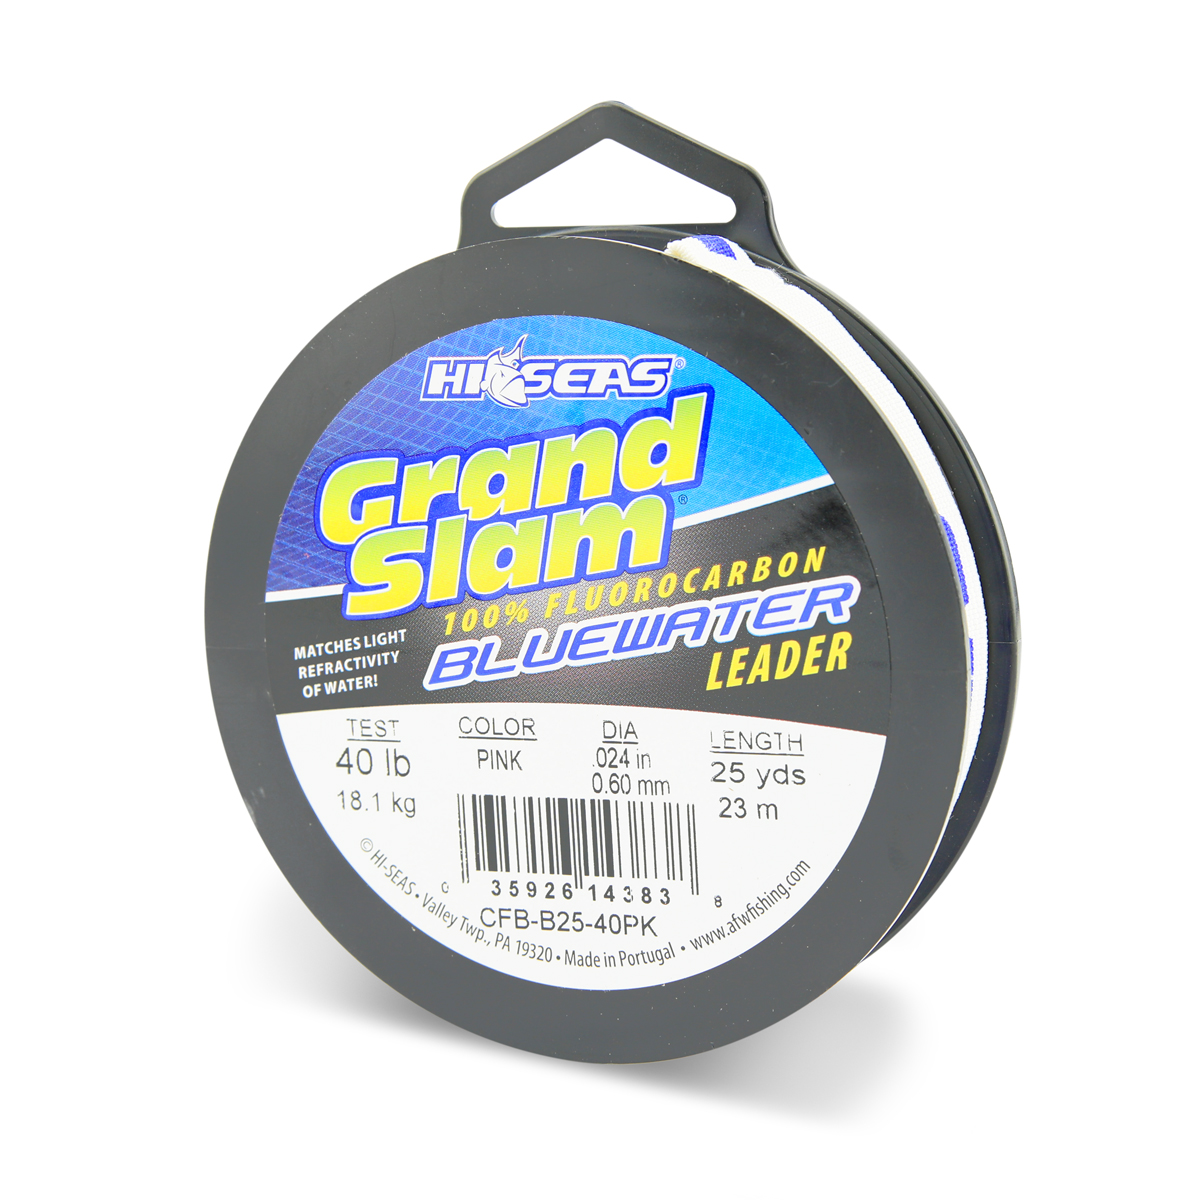 Grand Slam Bluewater 100% Fluorocarbon Leader, 40 lb / 18.1 kg